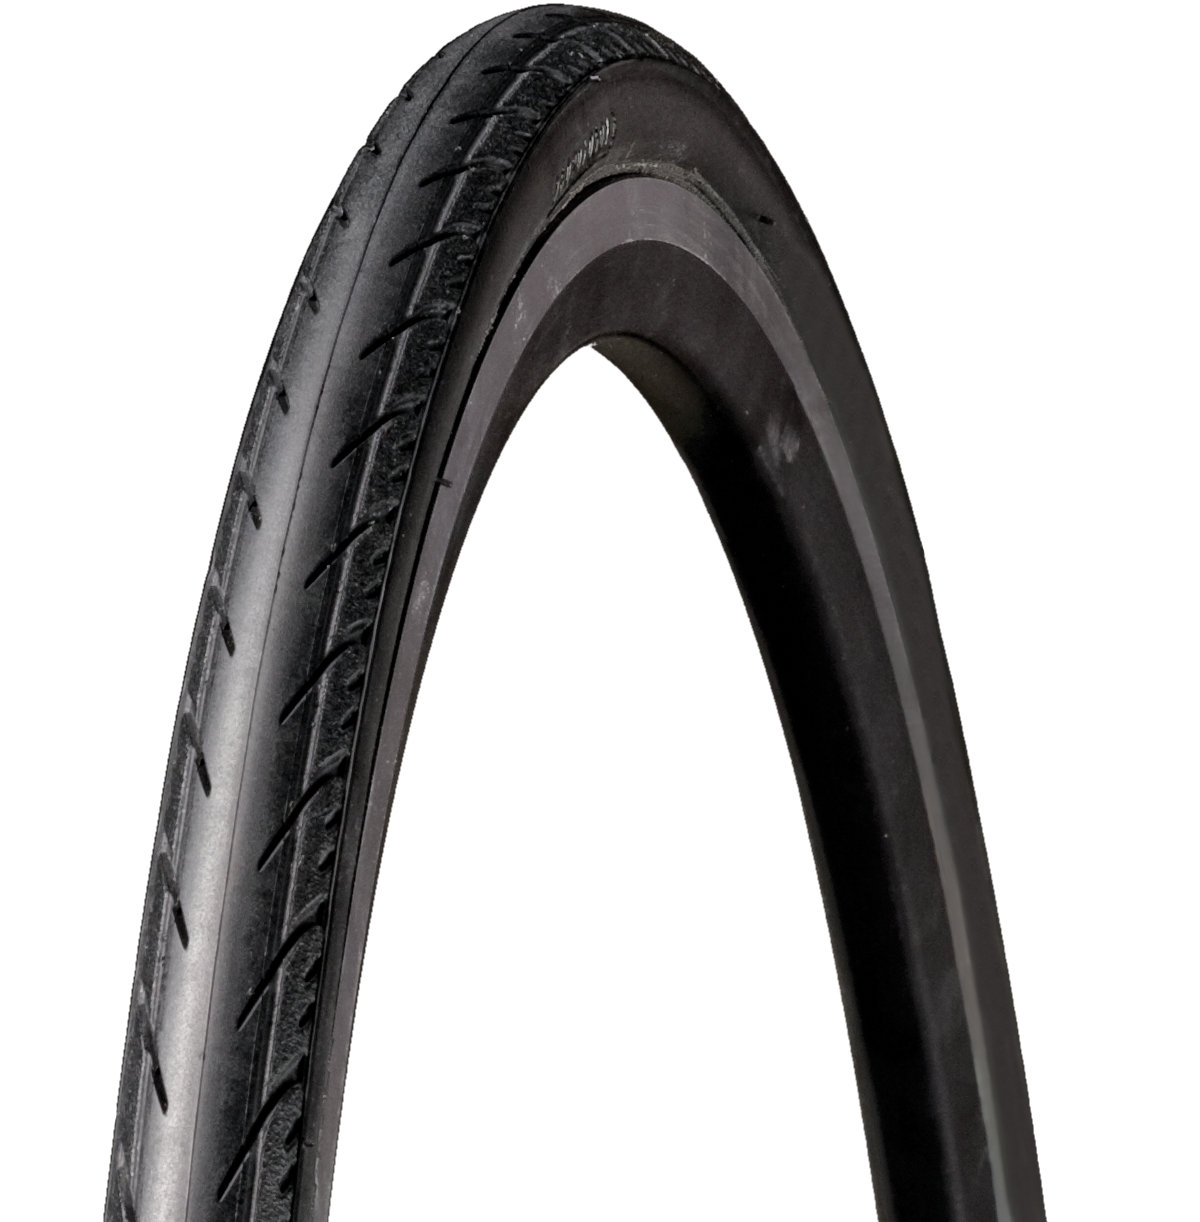 Tubes Road Track Fixie Bike Tire 120psi *New 700x23c Pair of Black Tires 